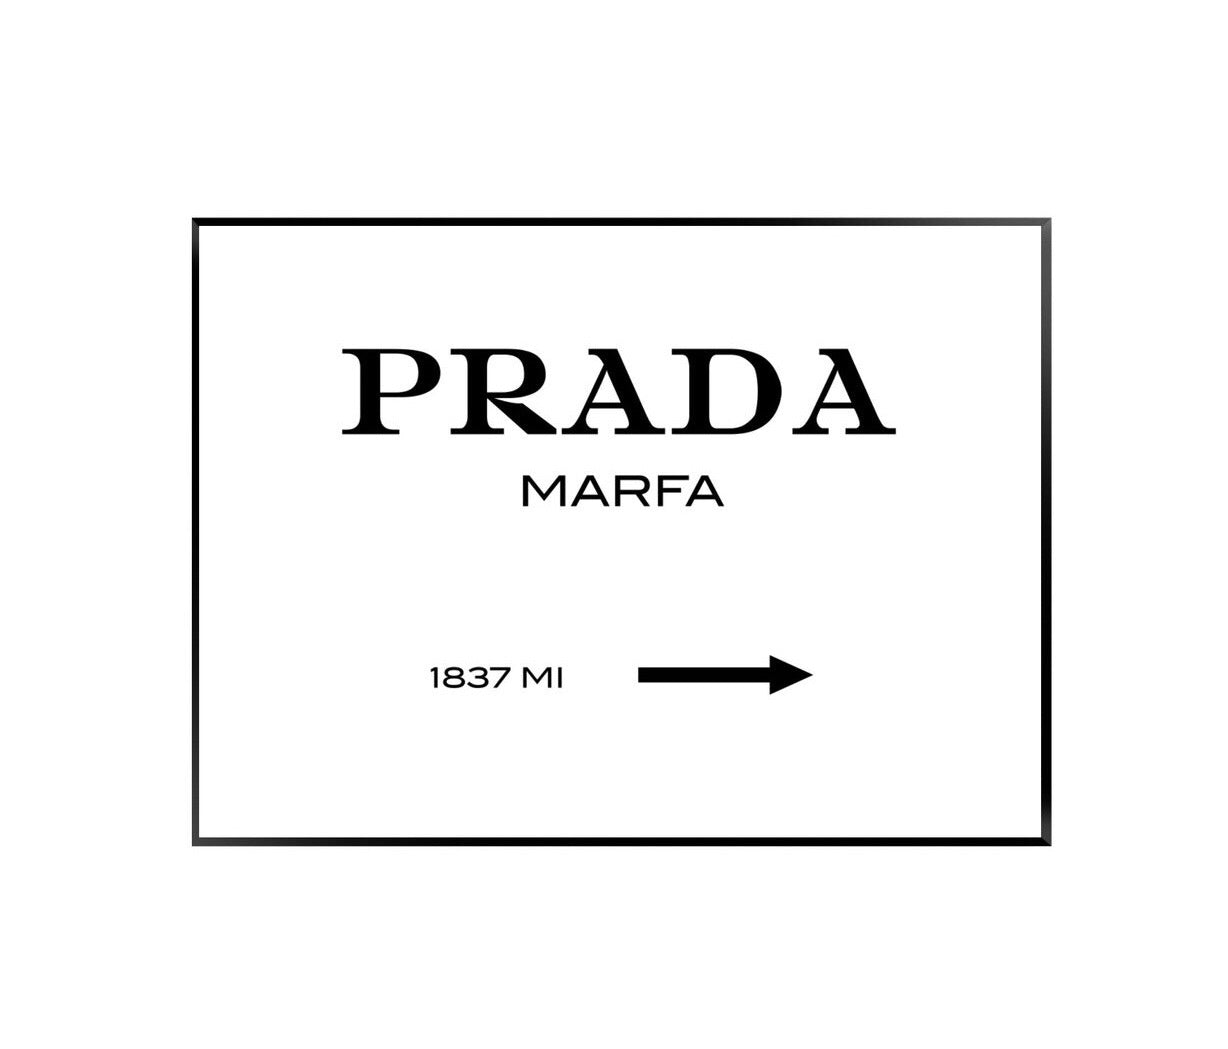 Prada Marfa - THE WALL STYLIST